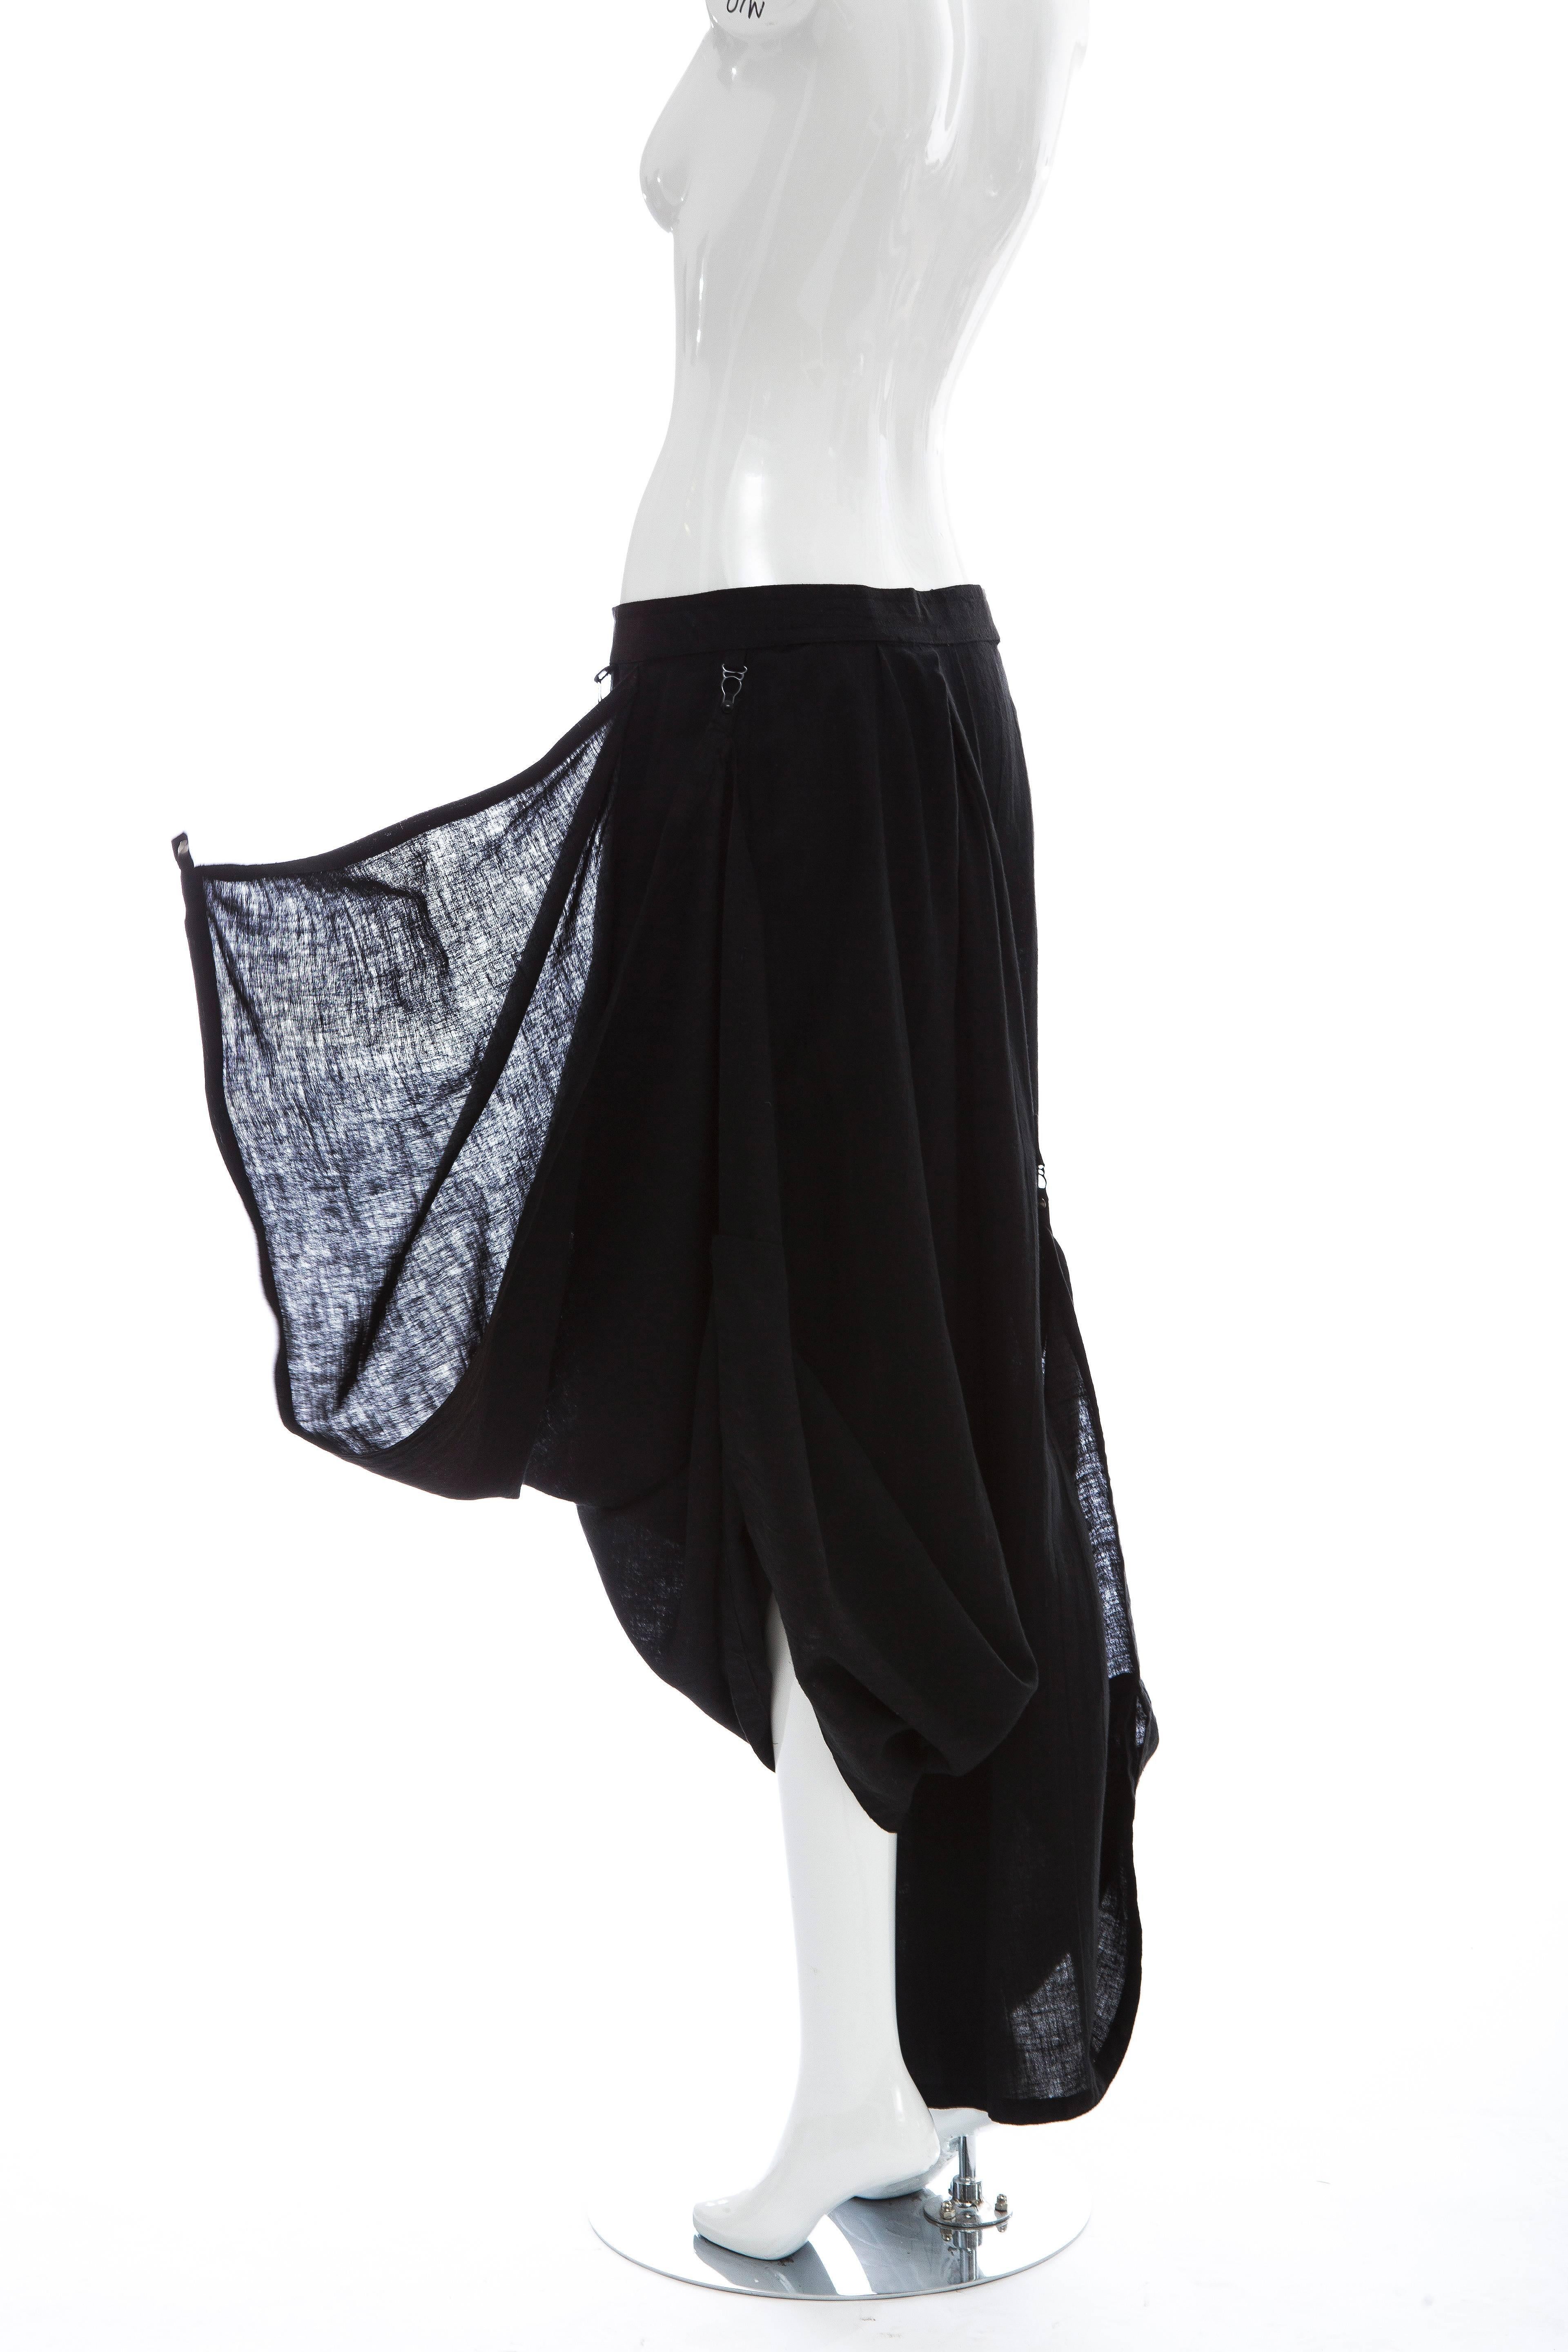 Kansai Yamamoto Black Linen Cotton Harem Pants, Circa 1980's 4